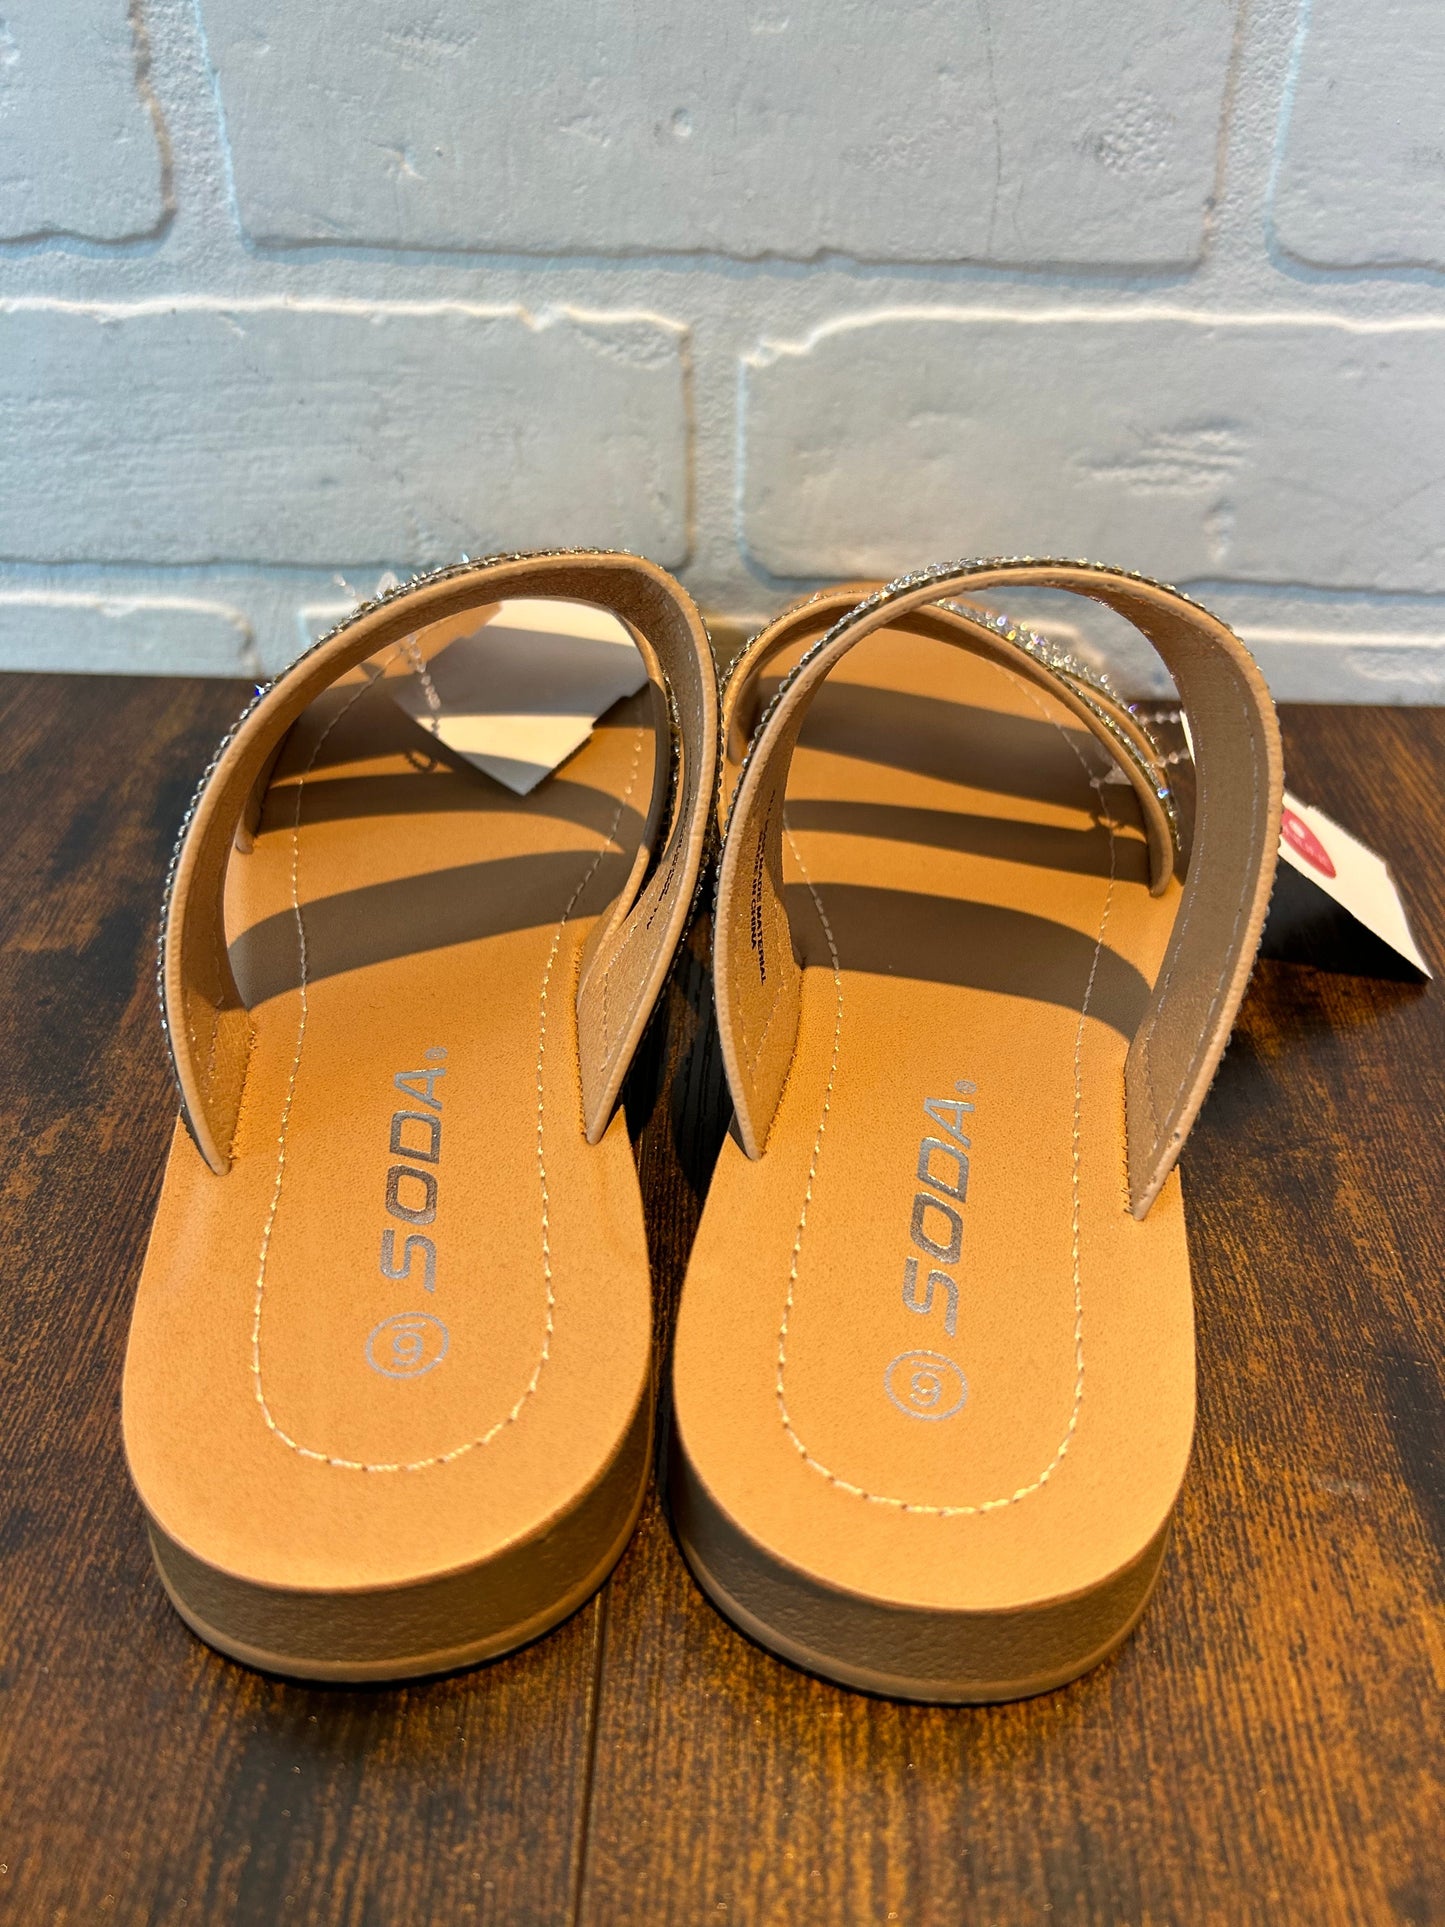 Silver & Tan Sandals Flats Soda, Size 6